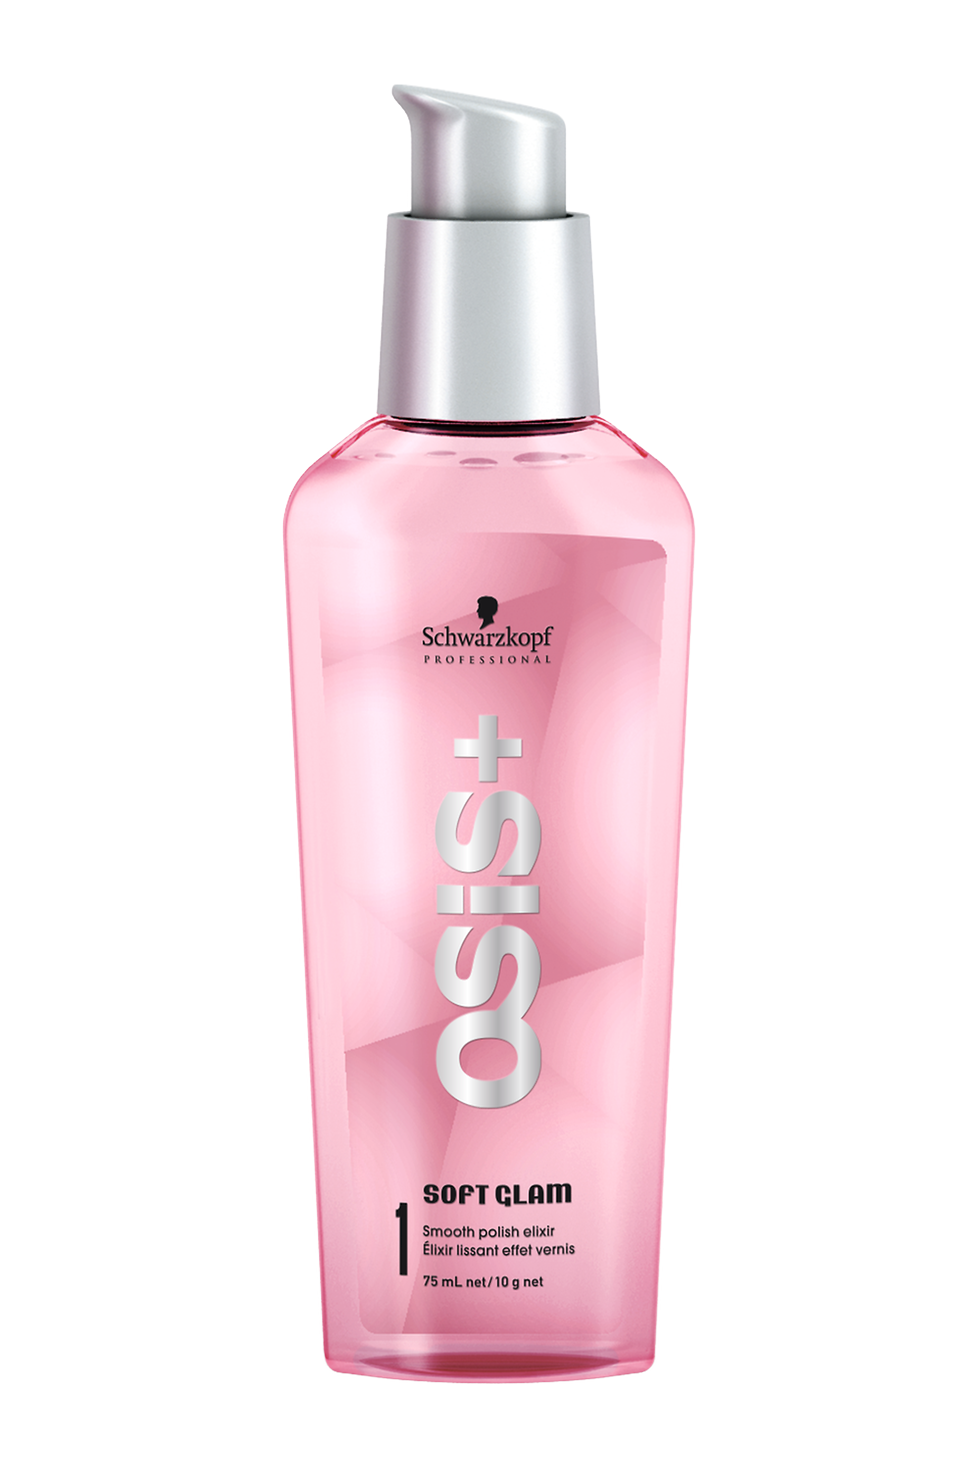 OSiS+ Soft Glam Smooth Polish Elixir